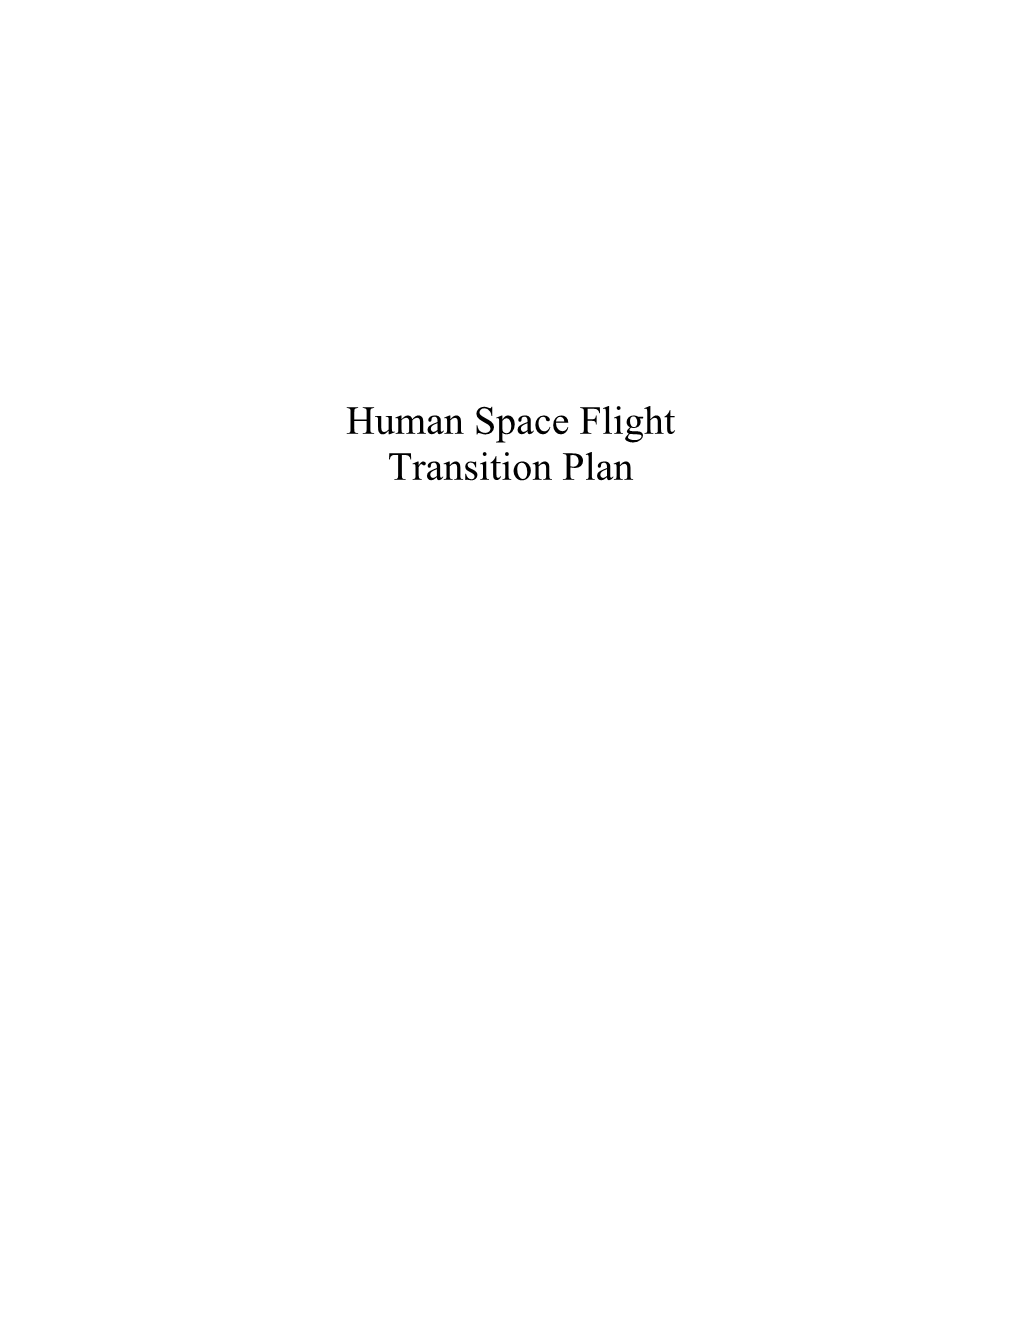 Human Space Flight Transition Plan